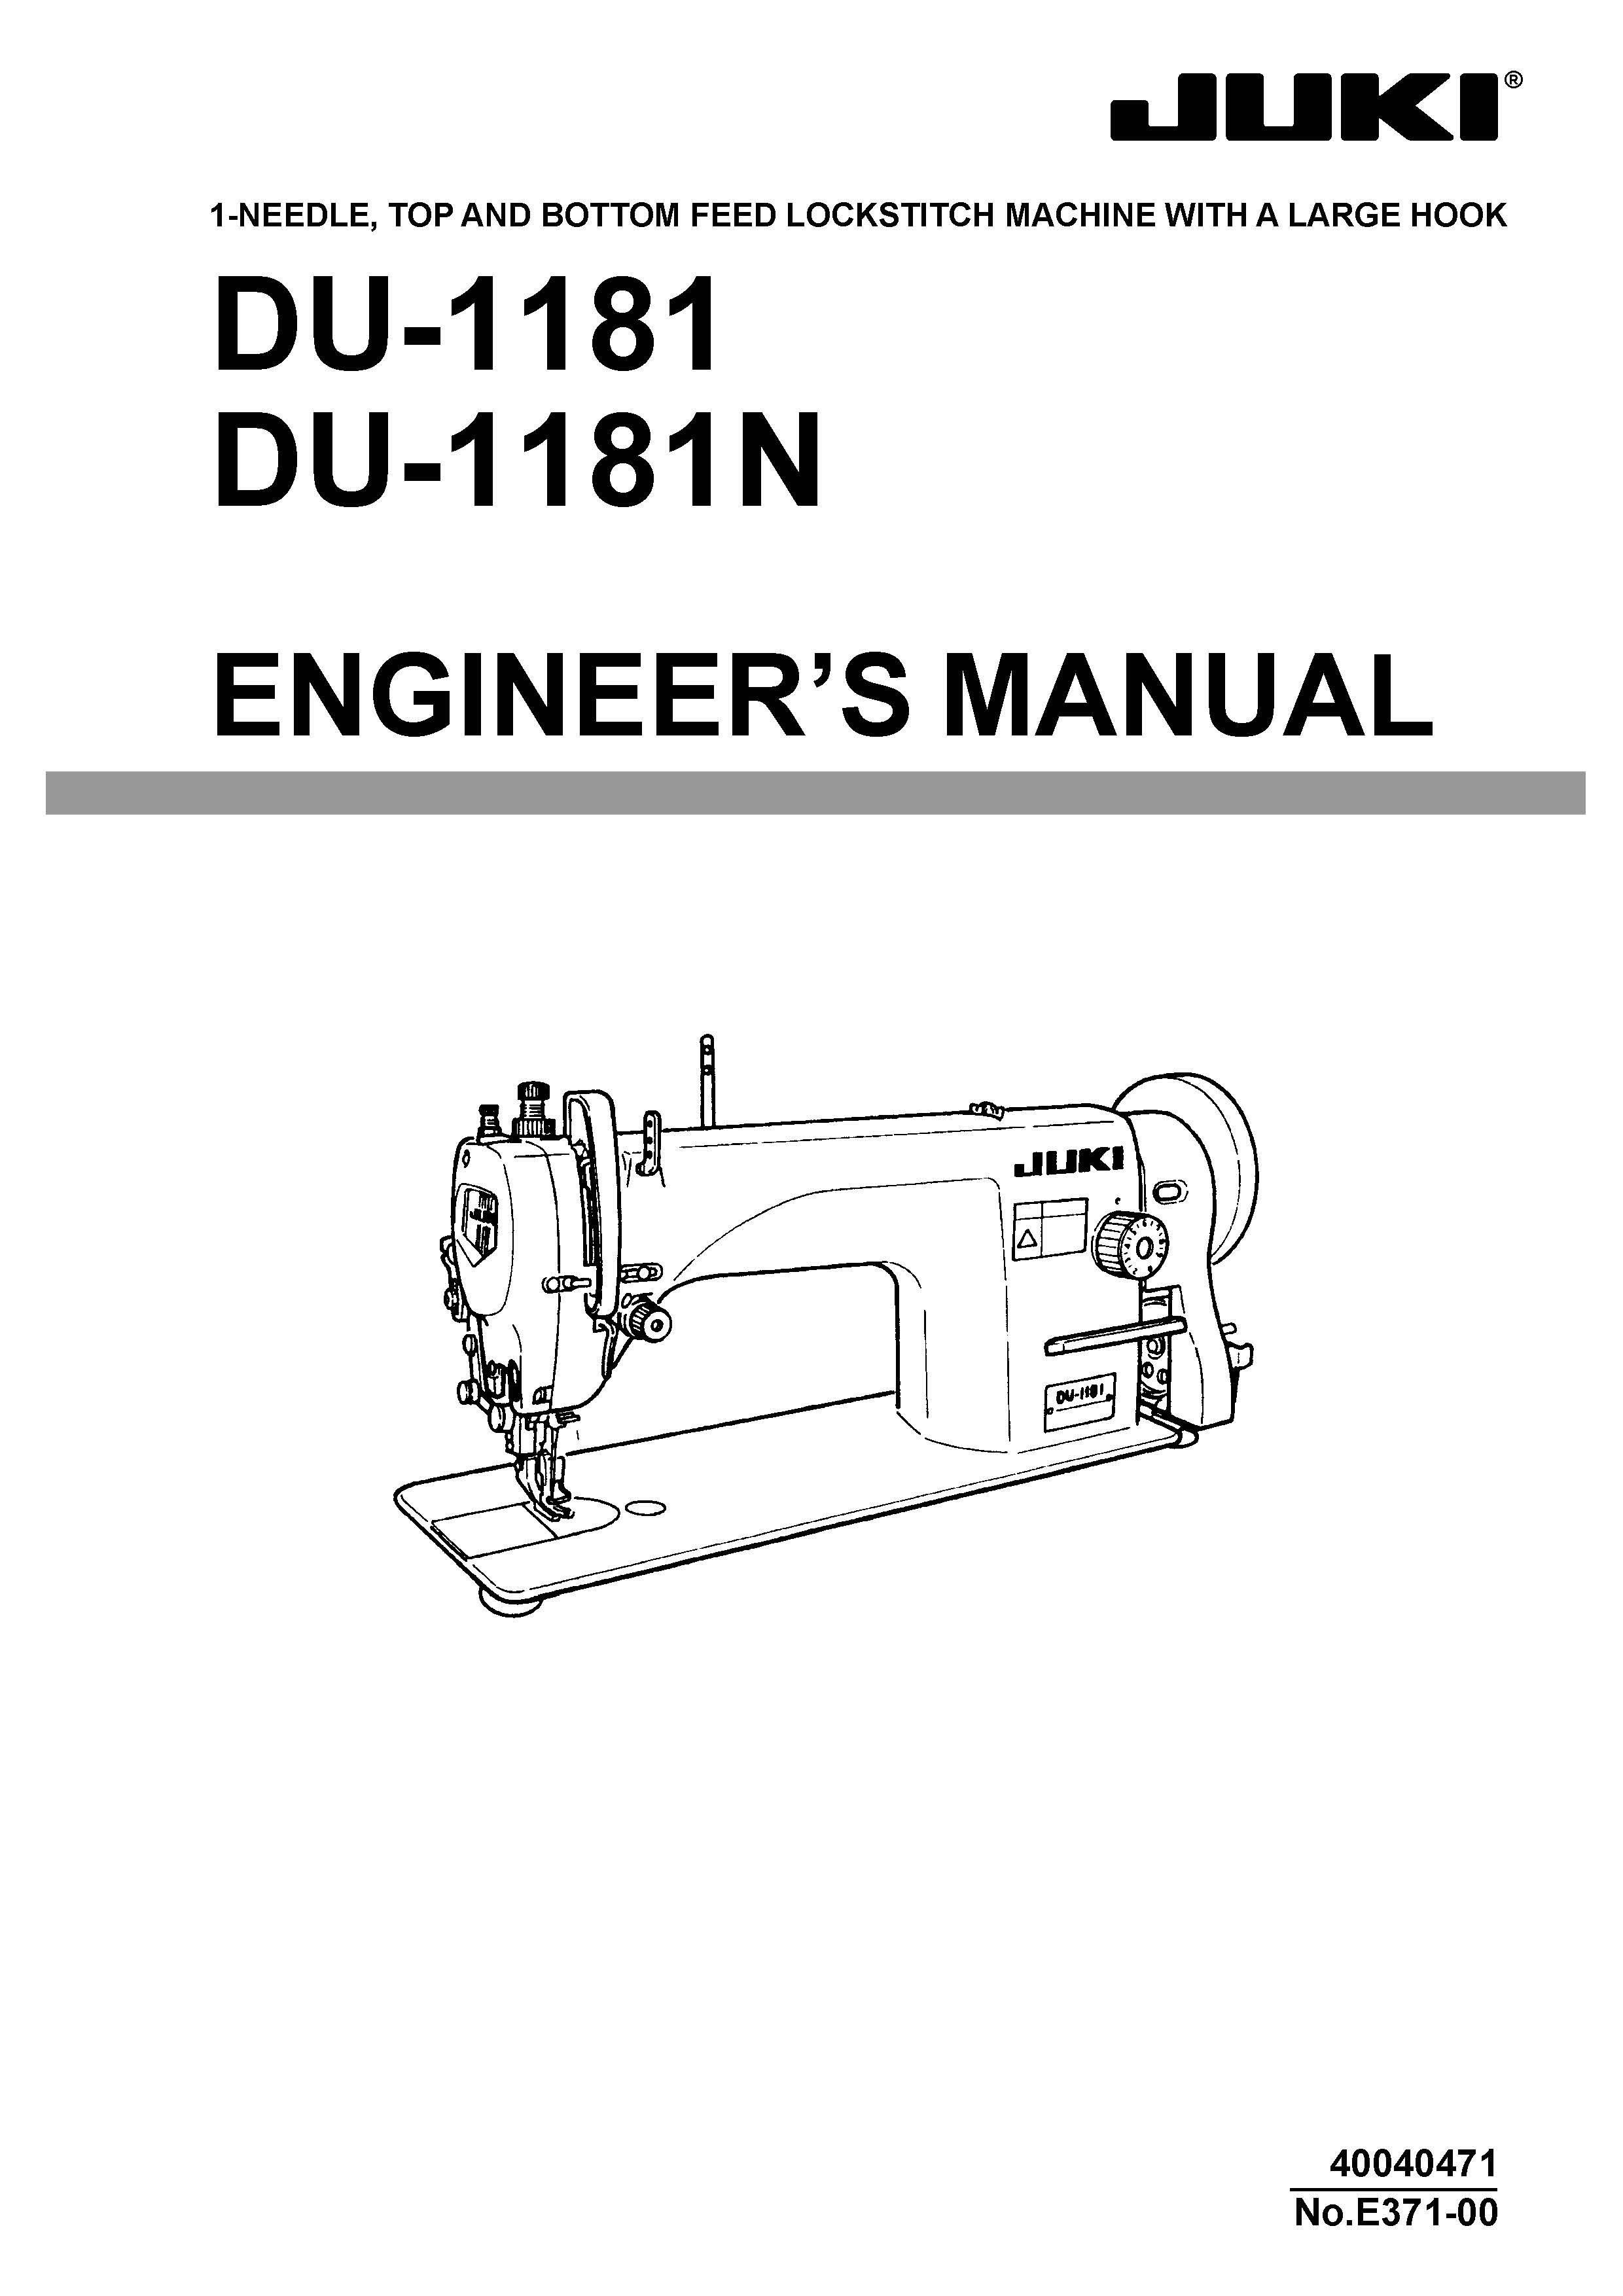 Service Manual Juki DU-1181, 1181N Sewing Machine engineer manual